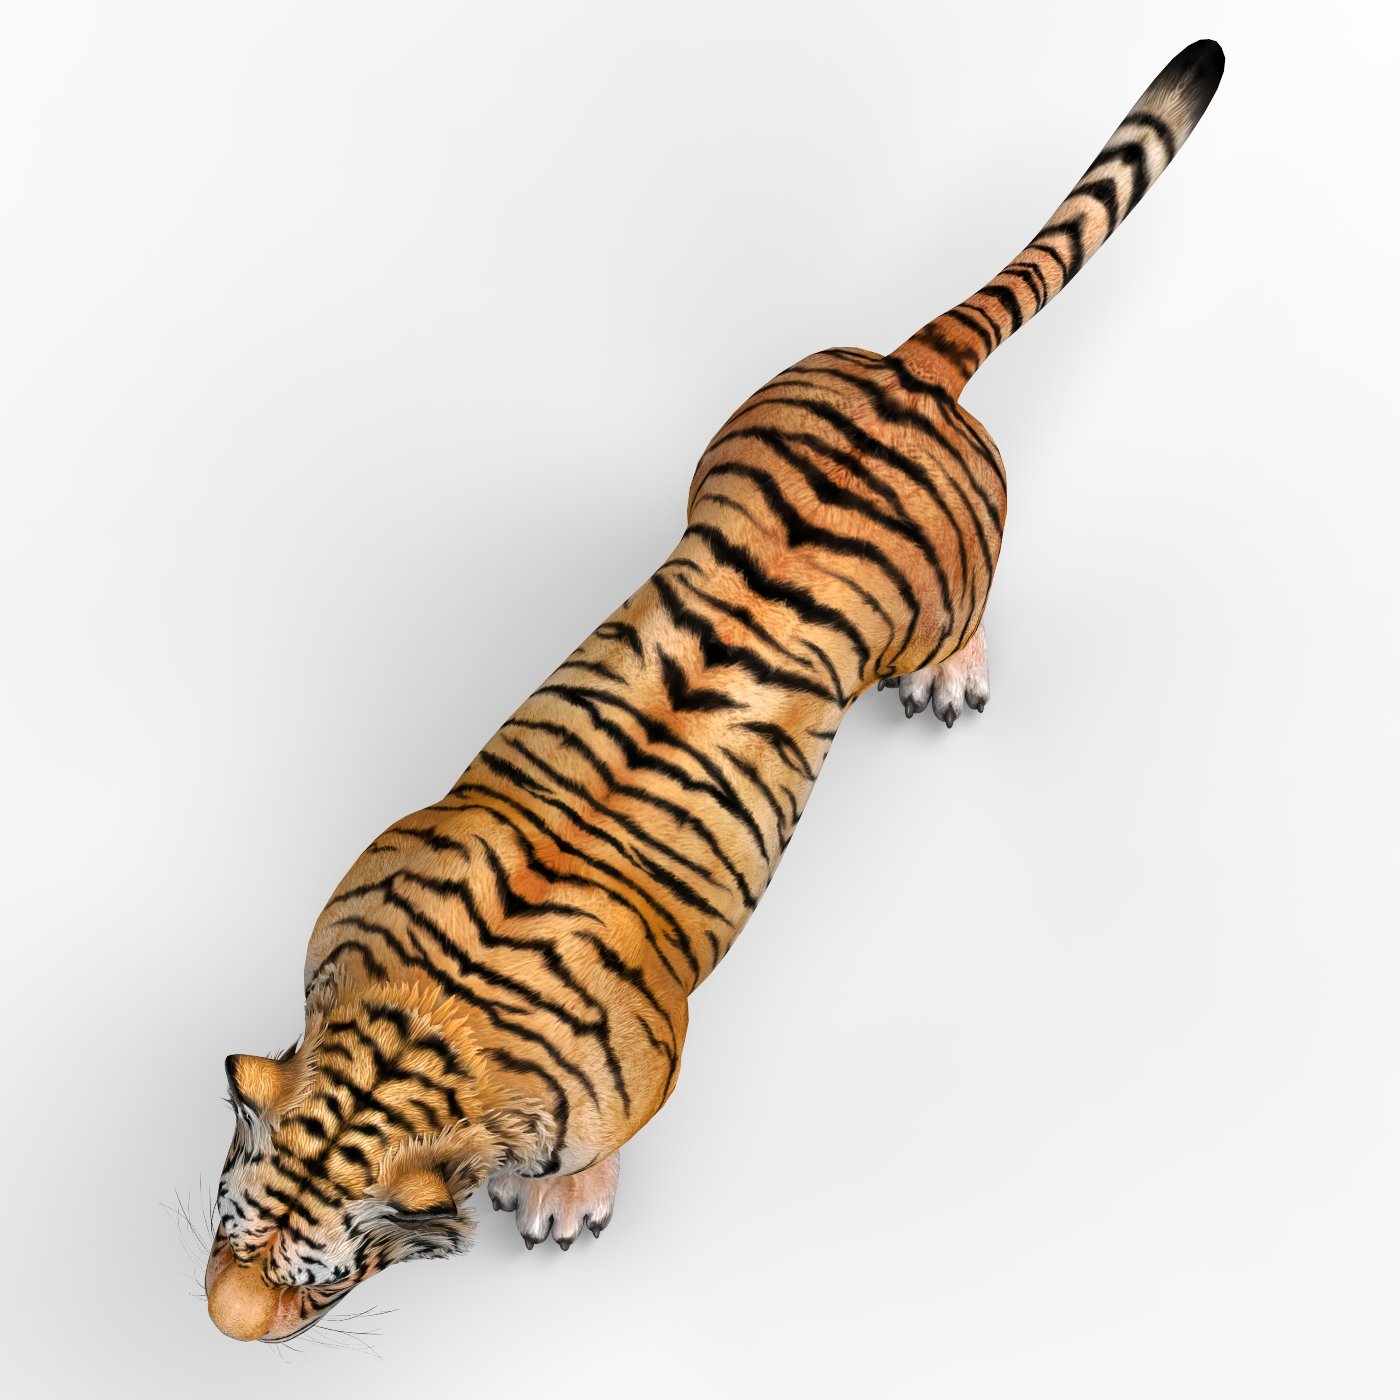 Cartoon Tiger White and Natural 3D Model $39 - .max .fbx .obj .3ds - Free3D